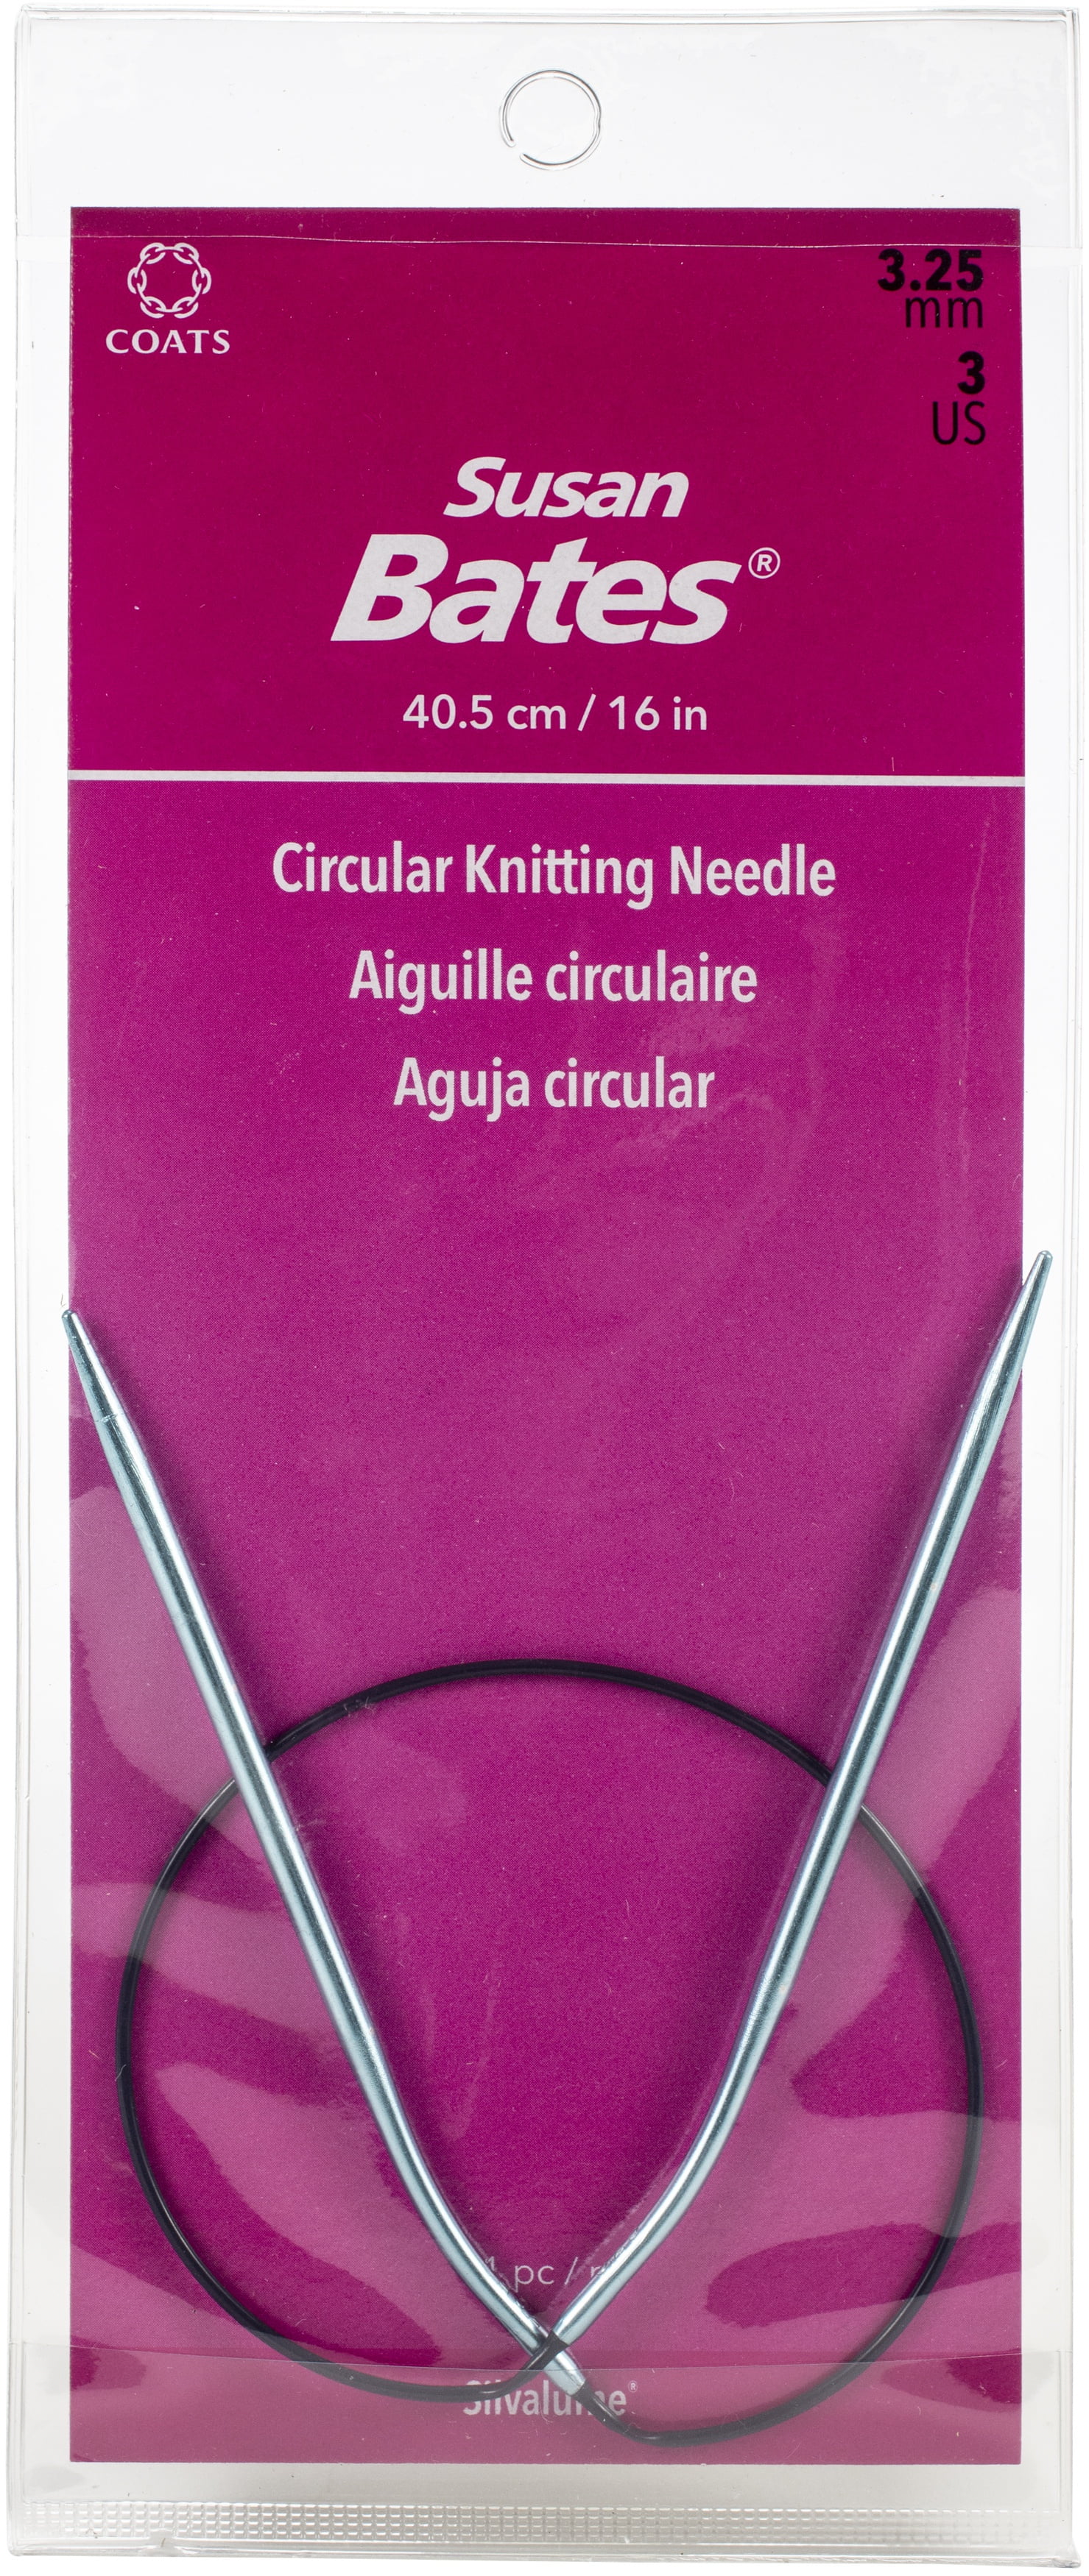 Susan Bates Silvalume 10” Knitting Needle Set 3ct by Susan Bates